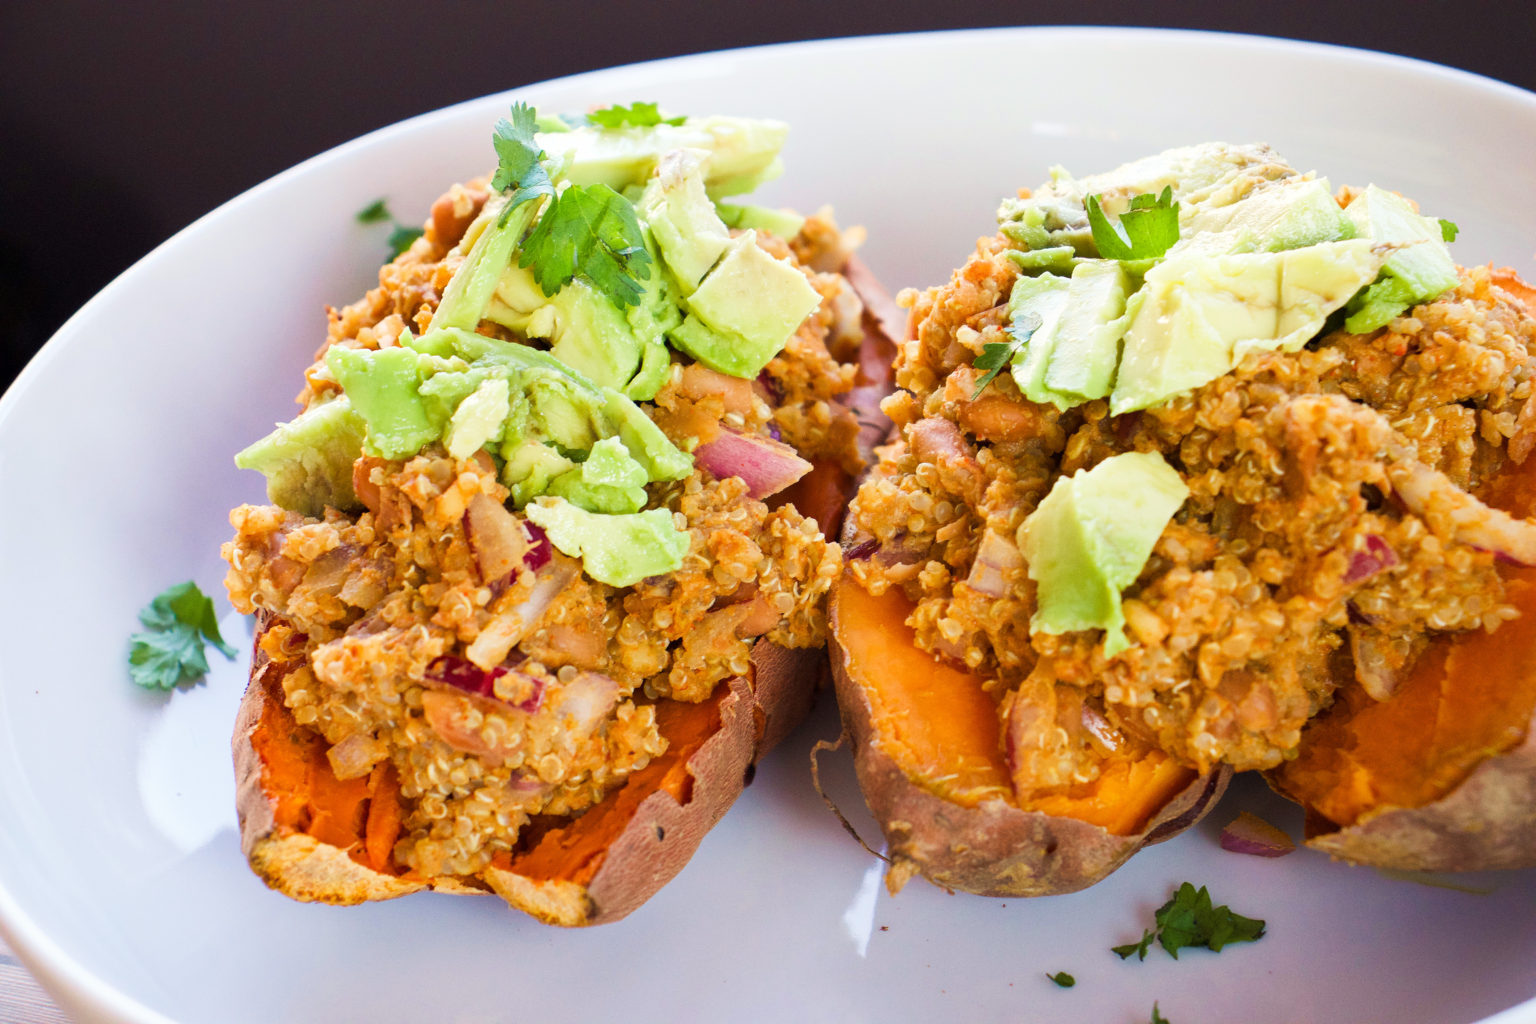 Vegan Mexican Inspired Stuffed Sweet Potatoes - The Balanced Blend